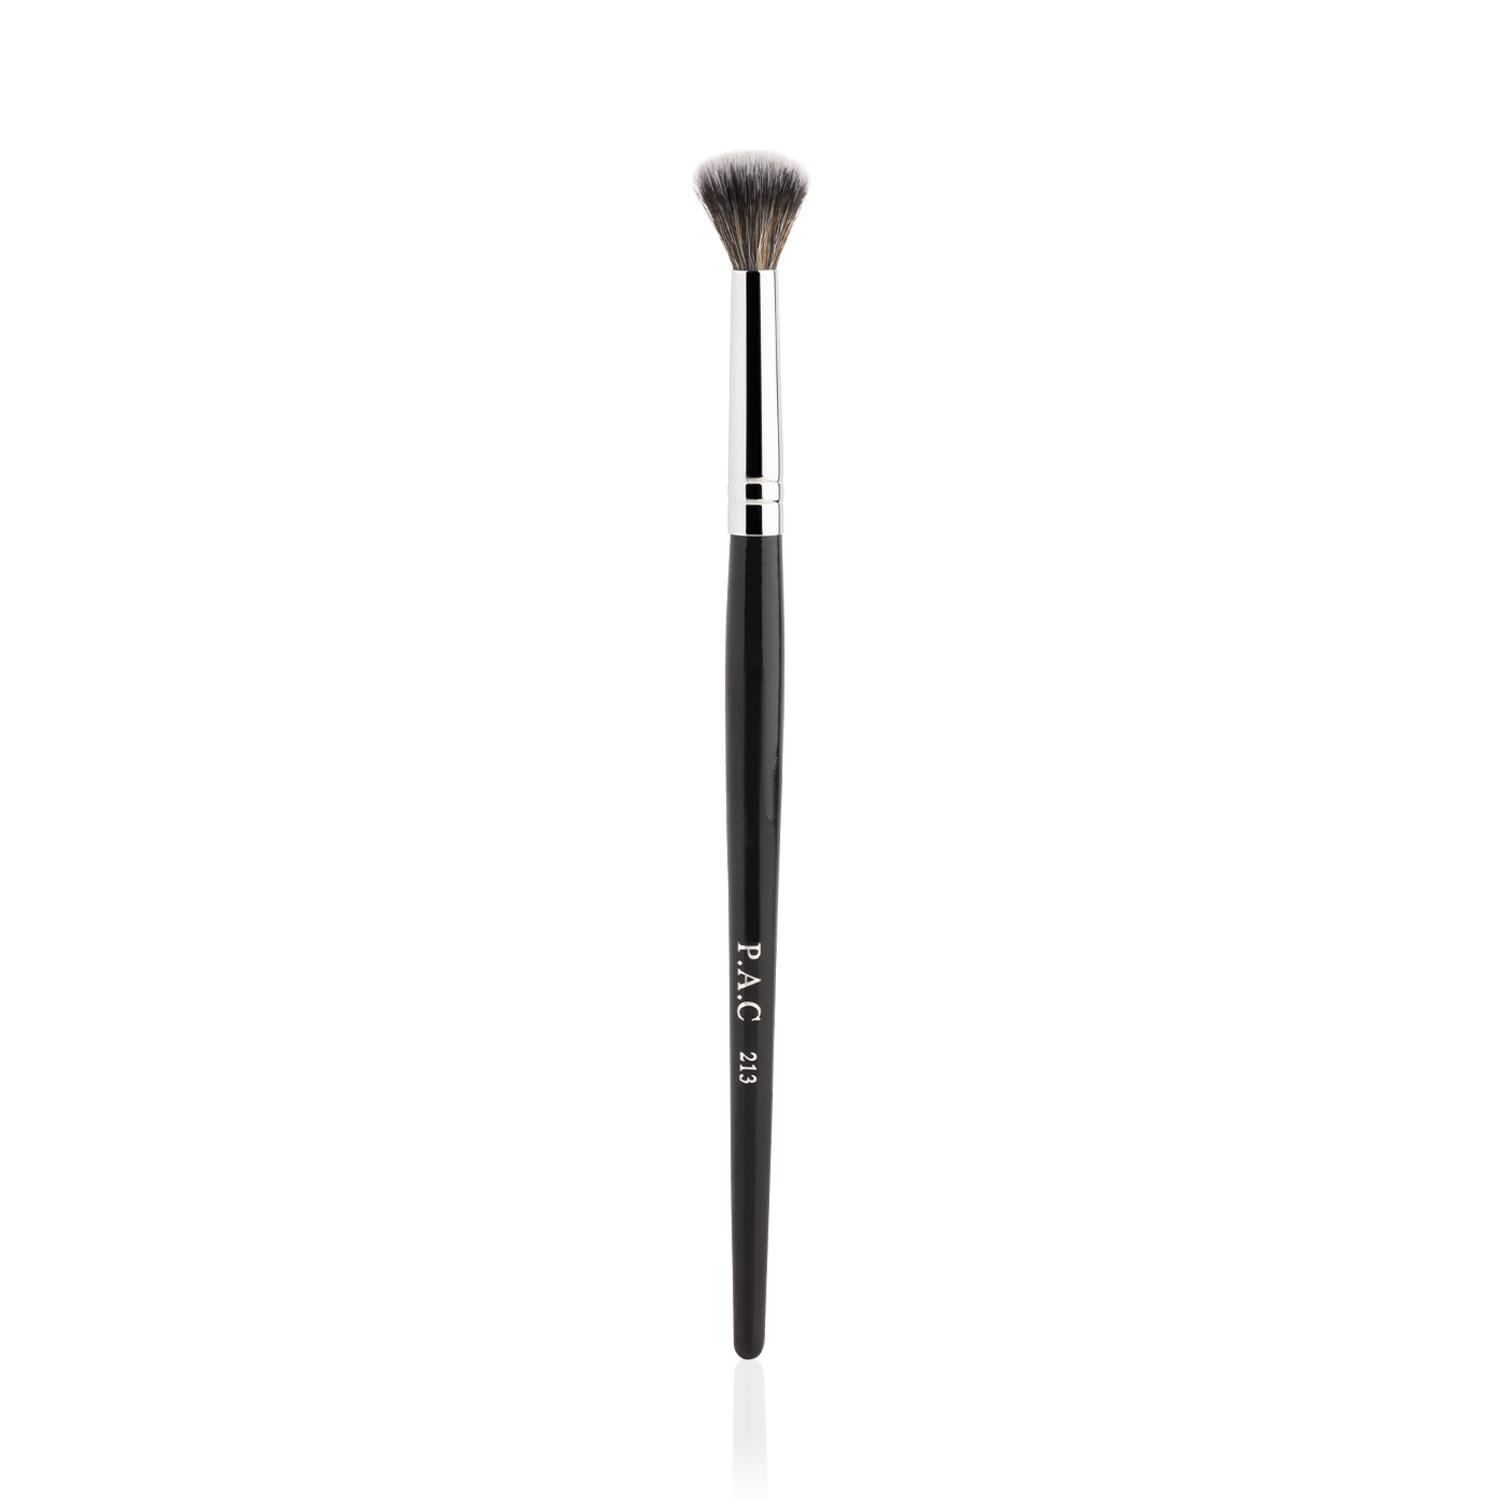 PAC | PAC Eyeshadow Blending Brush - 213 (1Pc)